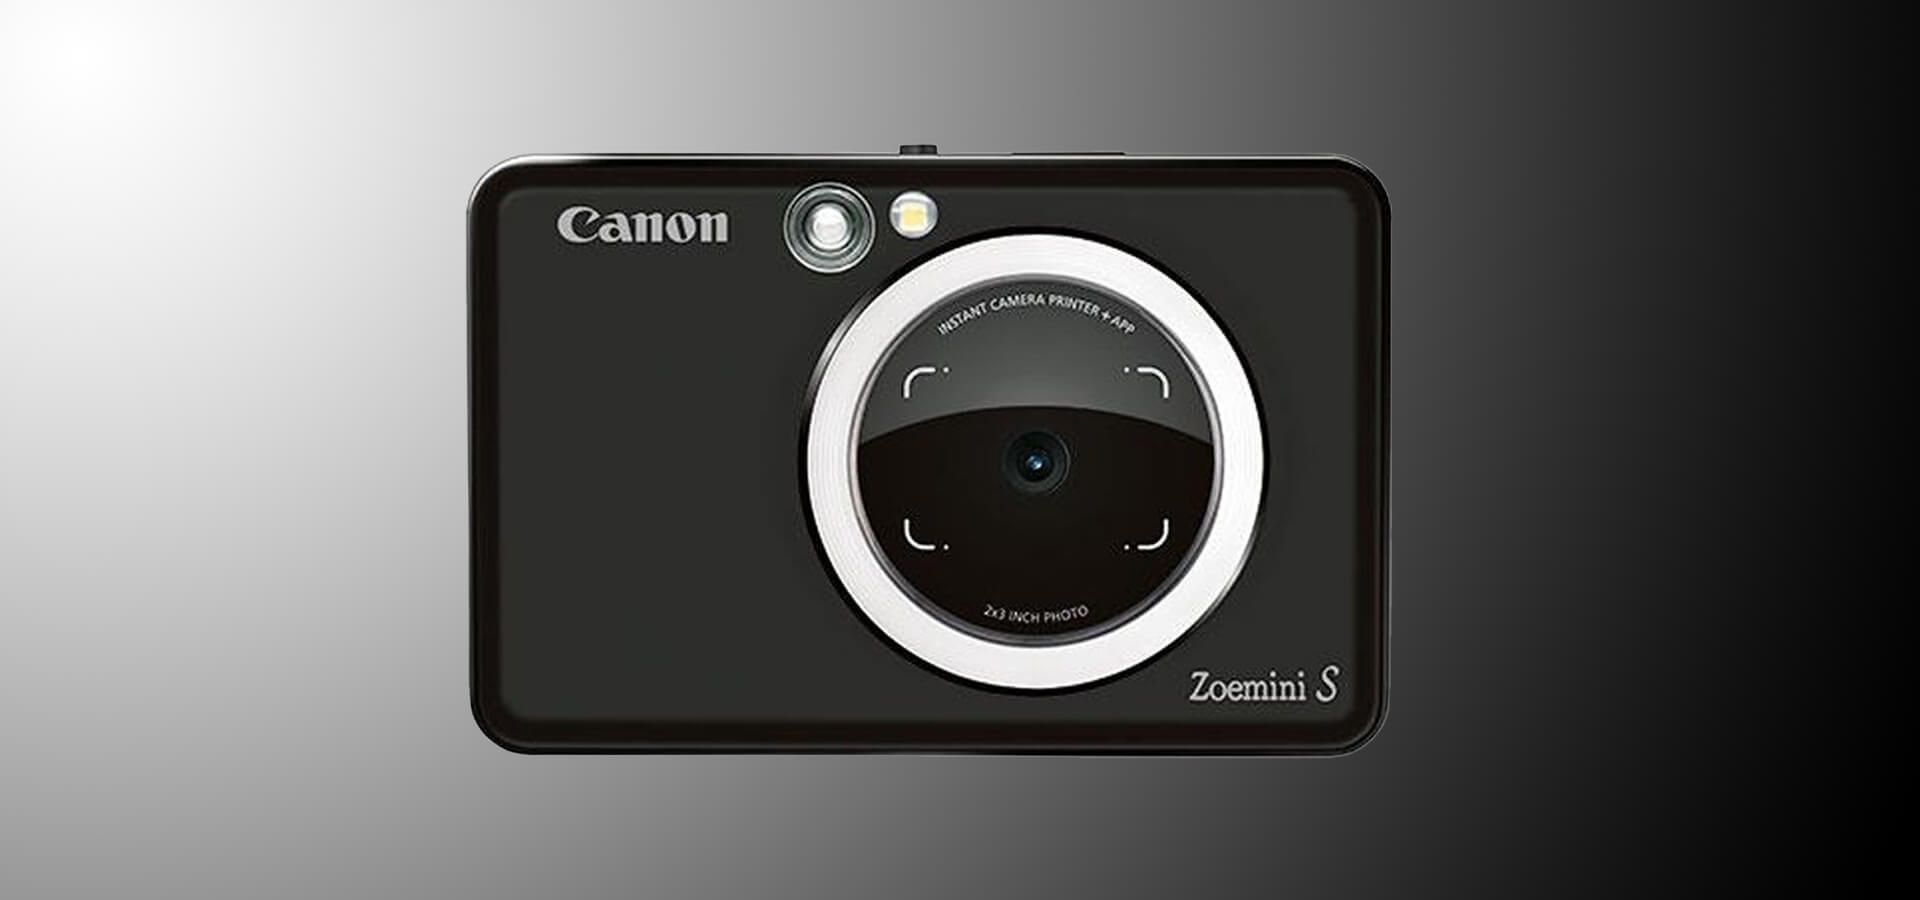 Canon Zoemini S - NowosciproduktowePL